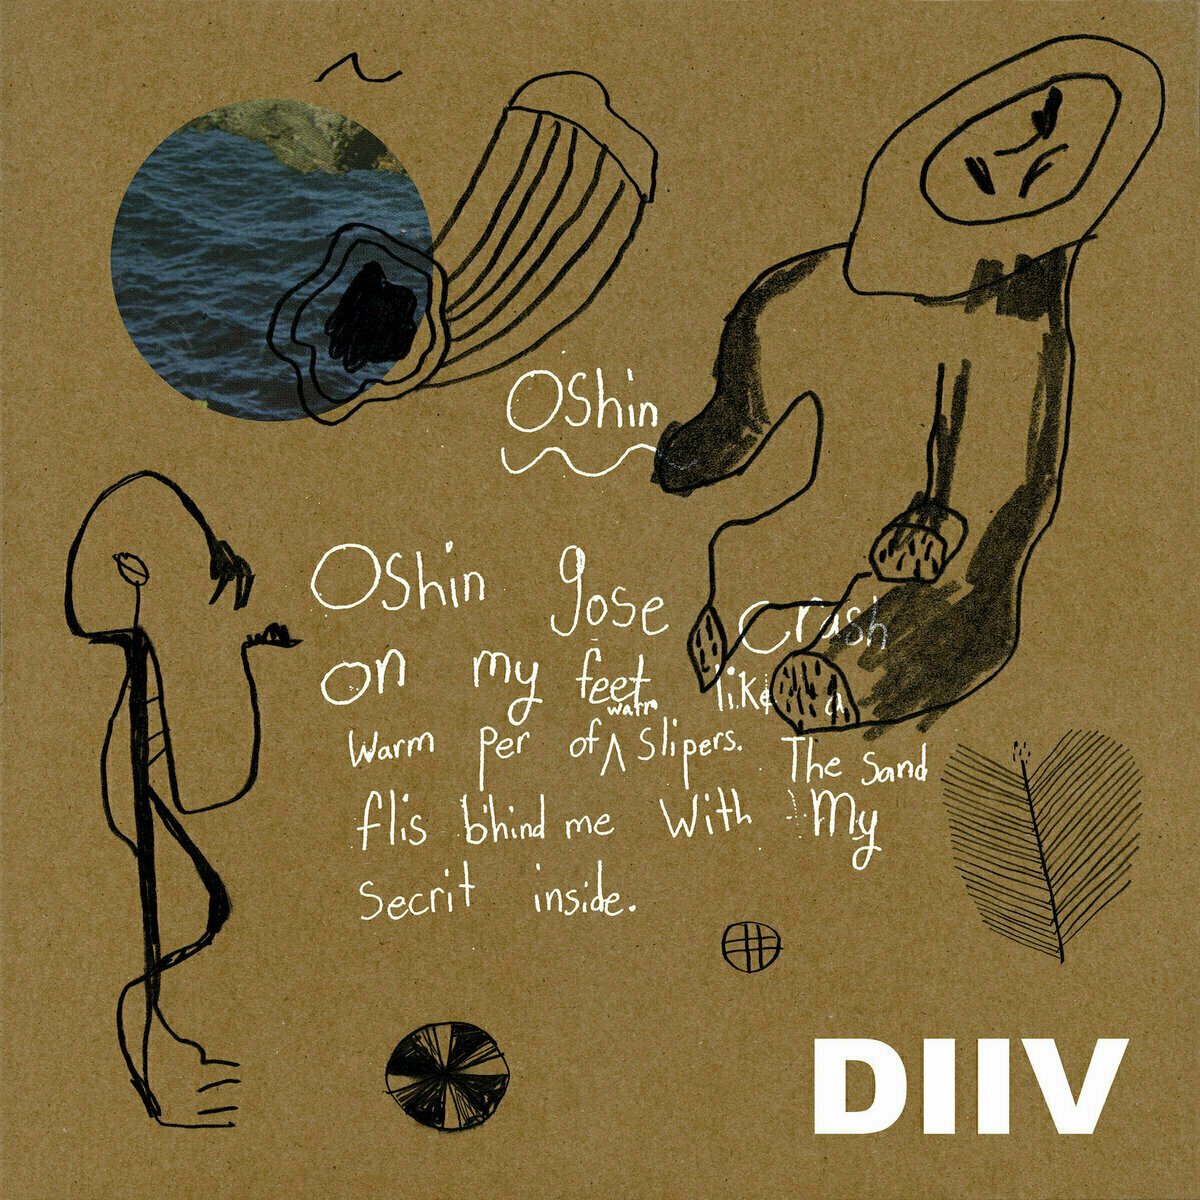 Diiv - Oshin - 10th Anniversary (Reissue) (Blue Vinyl) (2 LP) Diiv